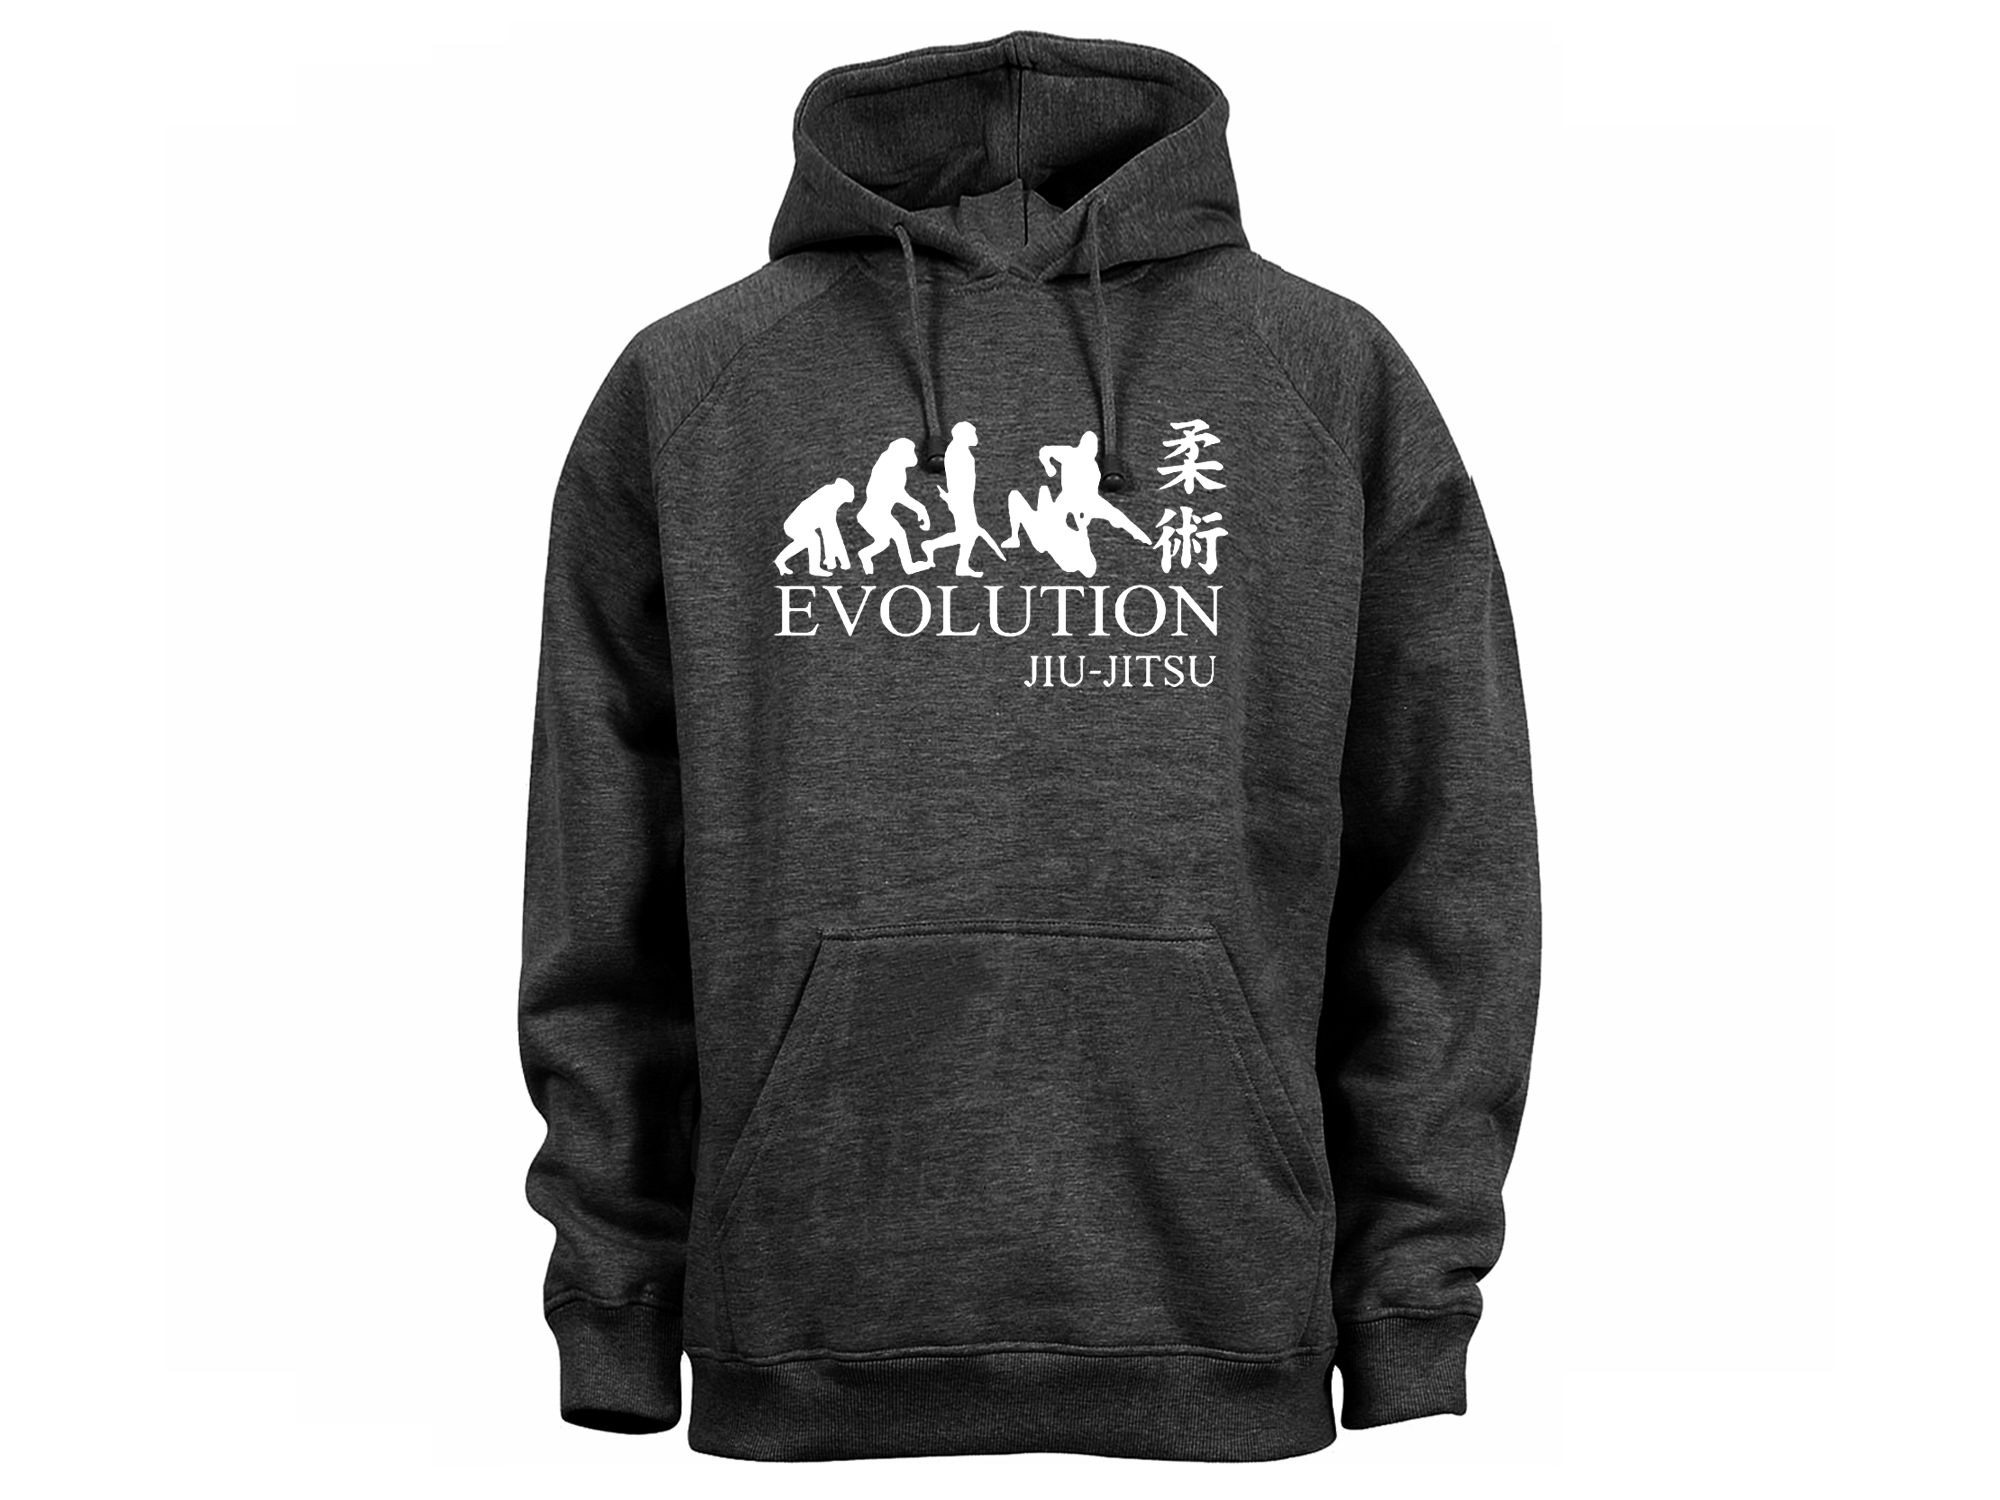 Evolution Jiu Jitsu Japanese martial arts gray pullover hoodie